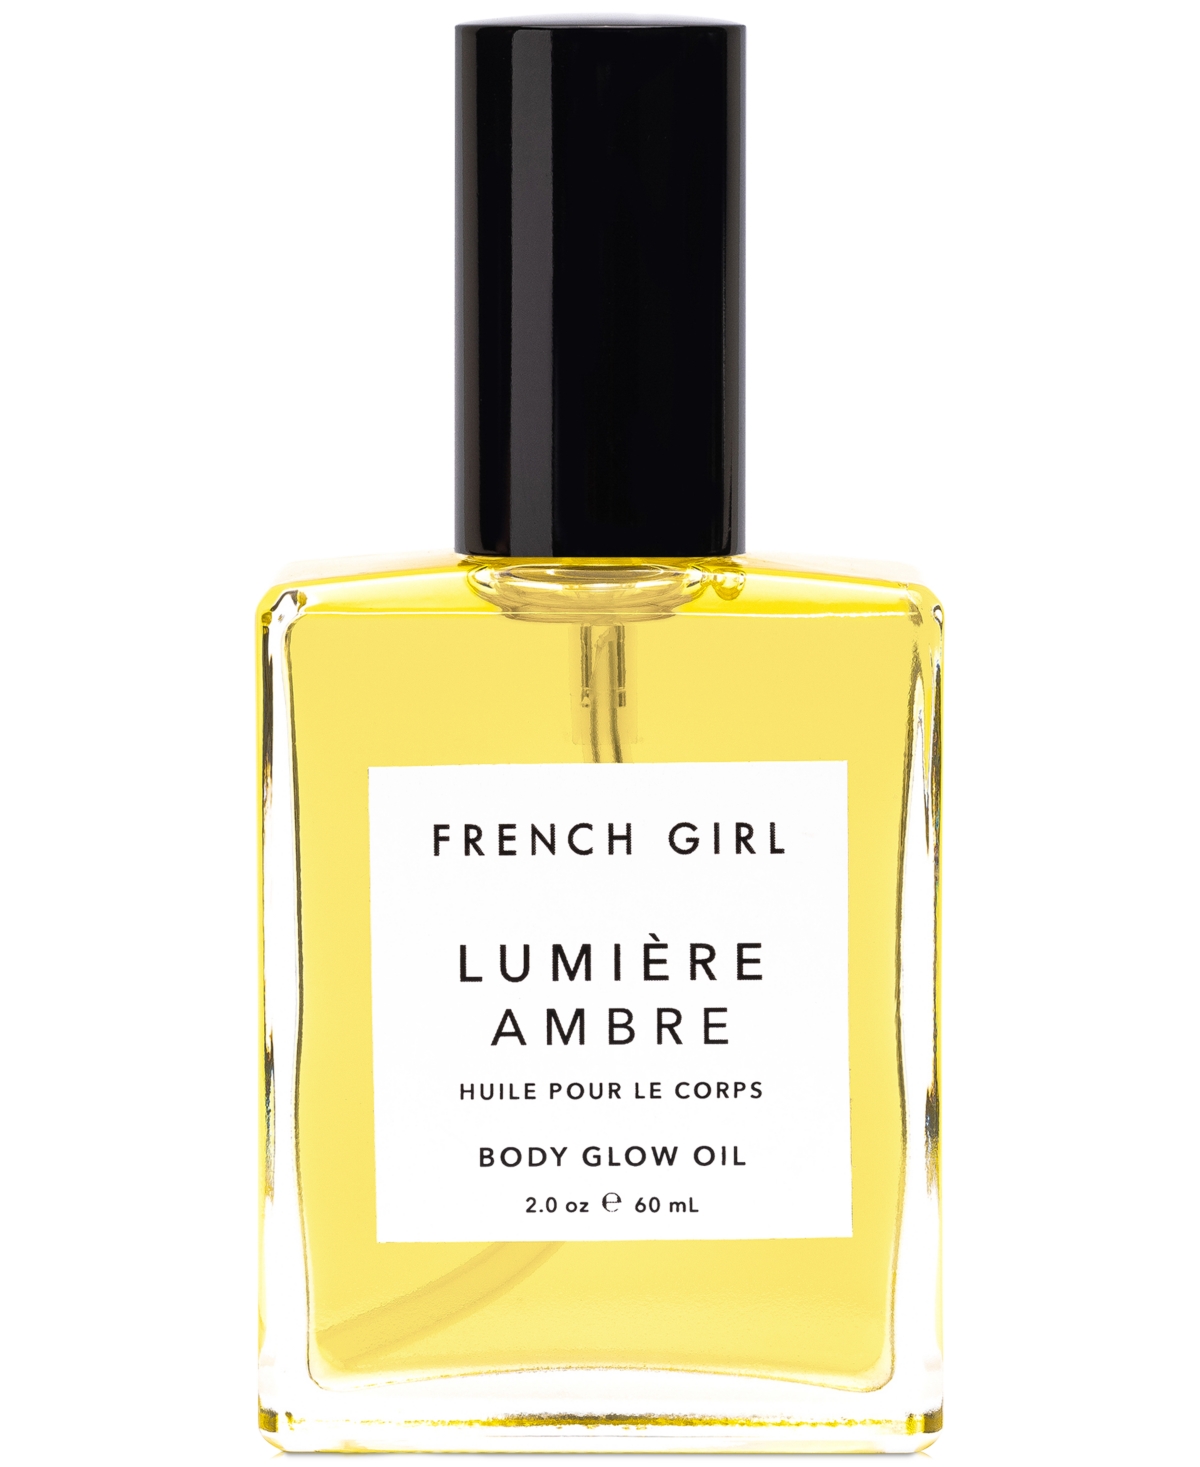 French Girl Lumiere Ambre Body Glow Oil, 2-oz.